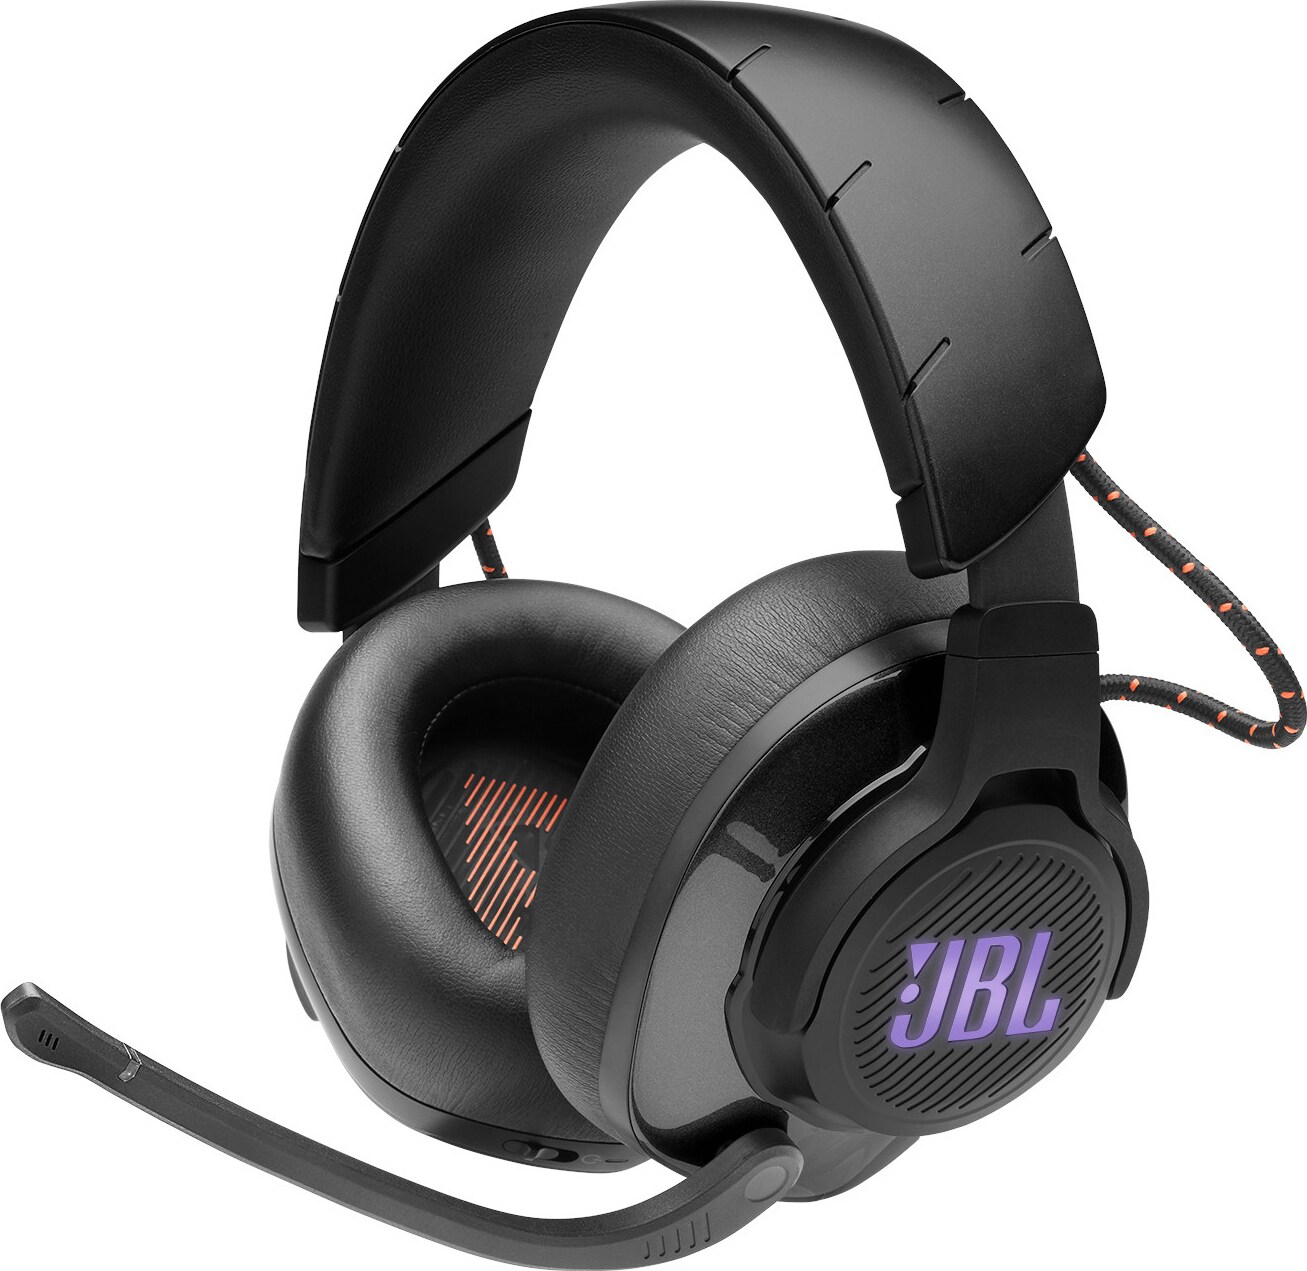 JBL Quantum 600 trådløst gaming headset - Gaming headset - Elkjøp